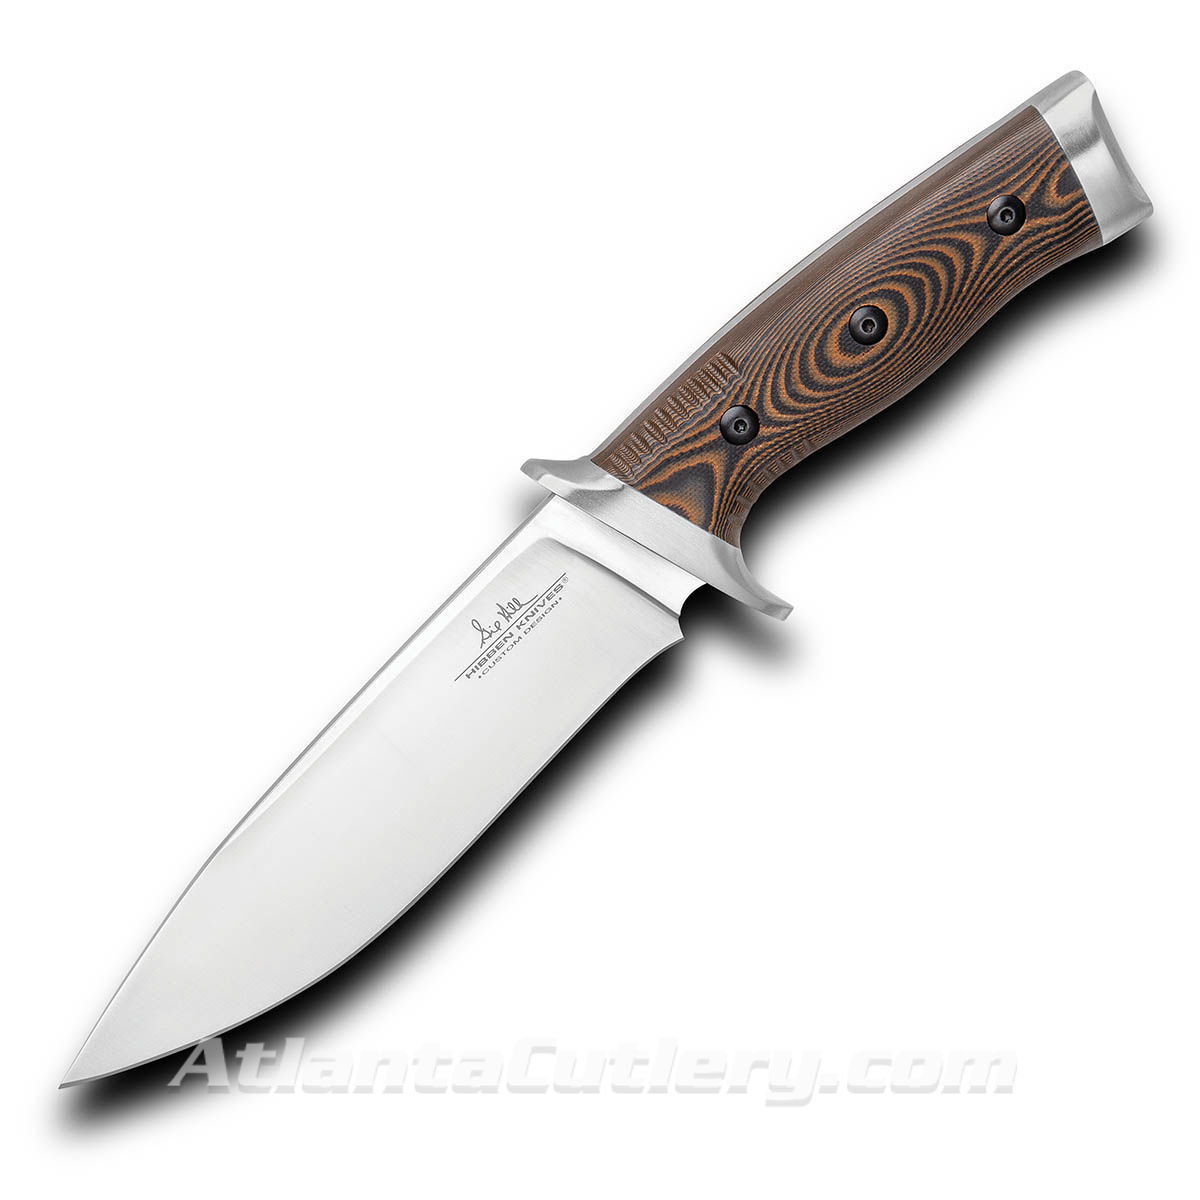 Gil Hibben Tundra Hunter Fixed Blade Knife with layered Micarta handle scales